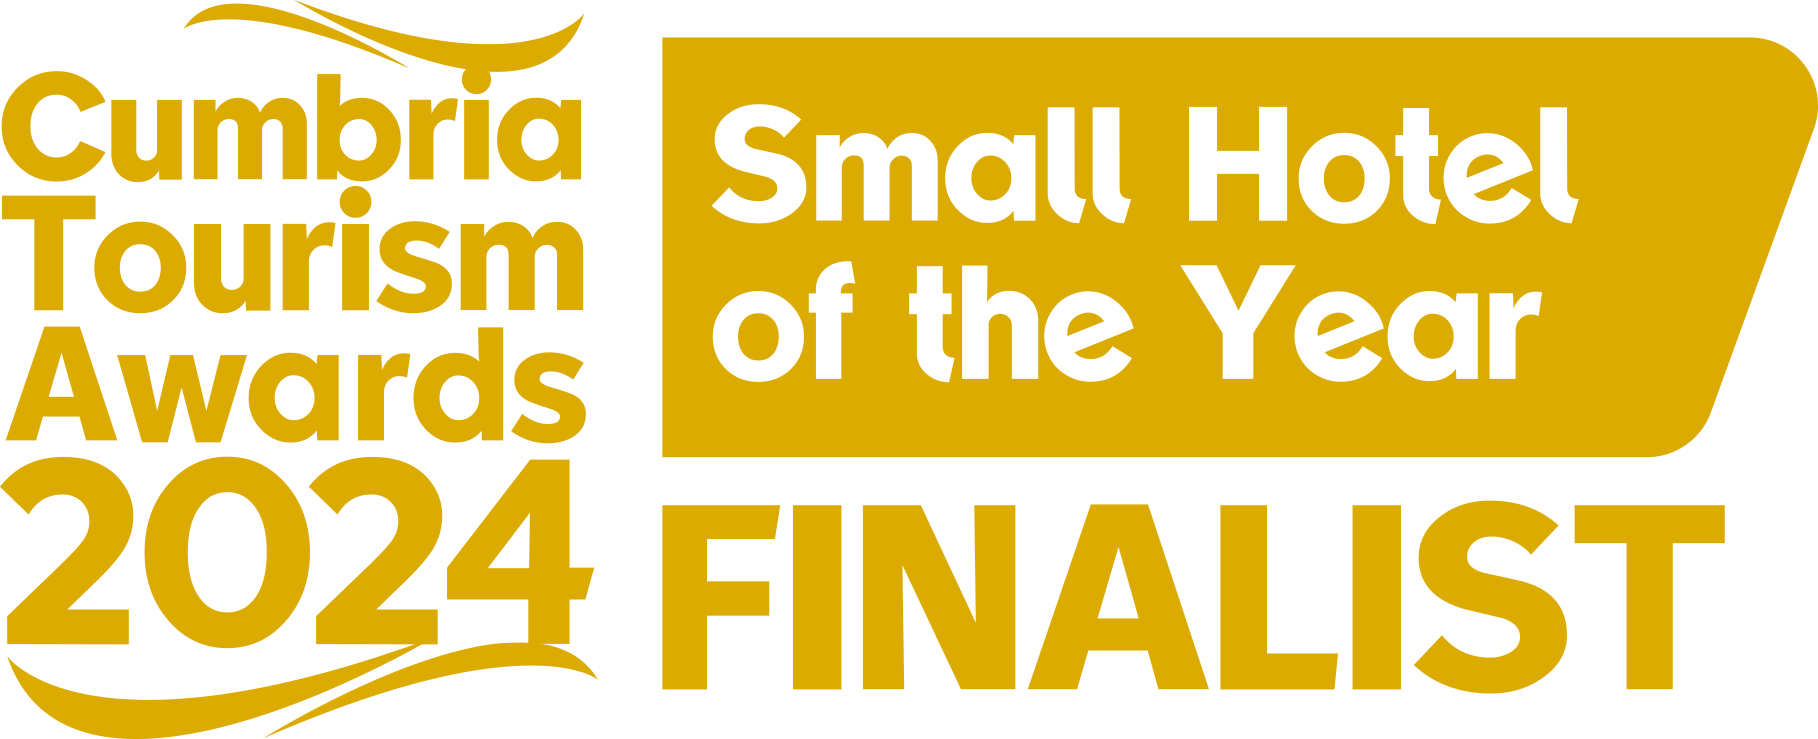 Cumbria Tourism Awards Small Hotel Finalist